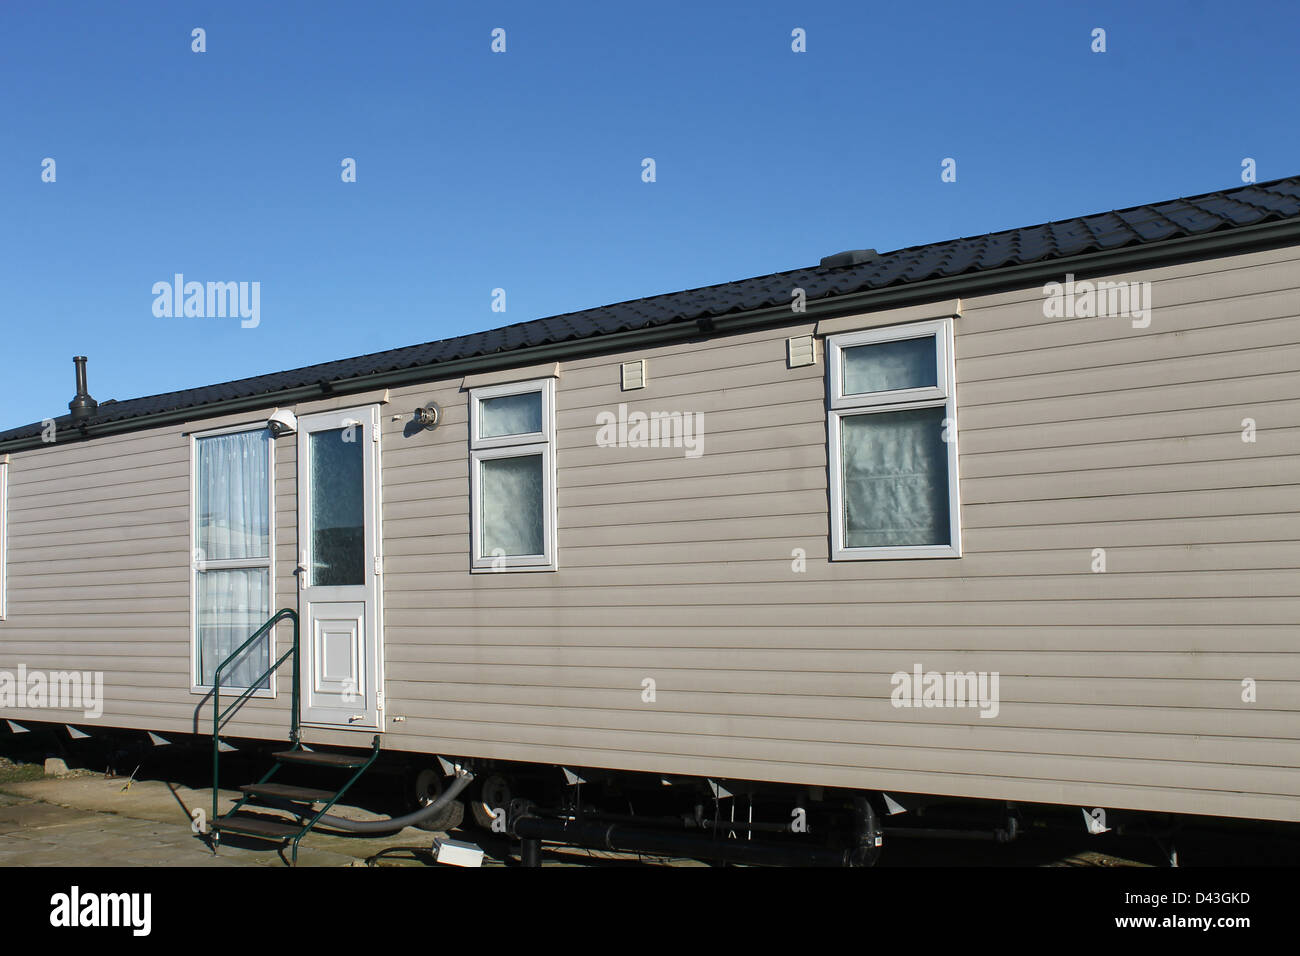 Exterior of trailer home in caravan park. Stock Photo